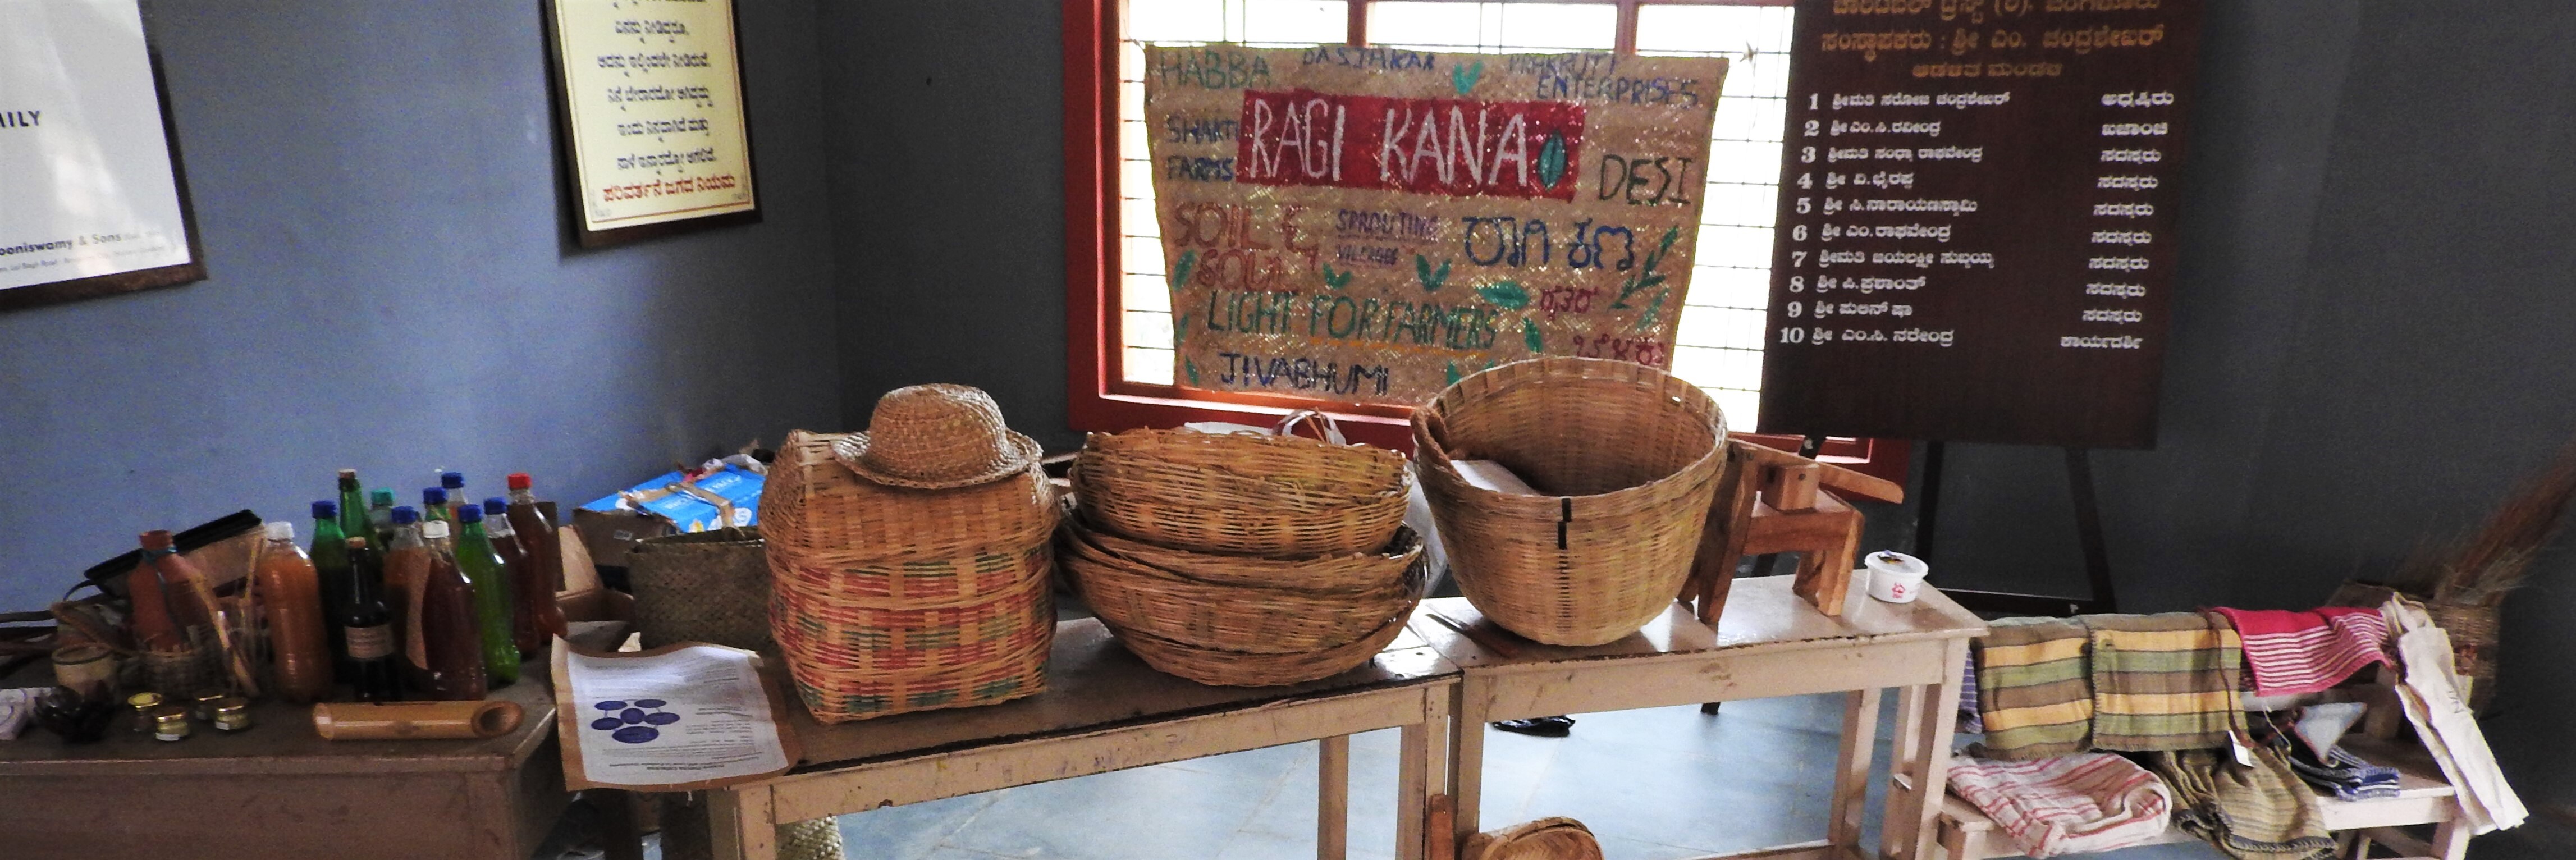 Ragi Kana is more than just a market - it's a movement reviving village life. Photo by Elita Almeida